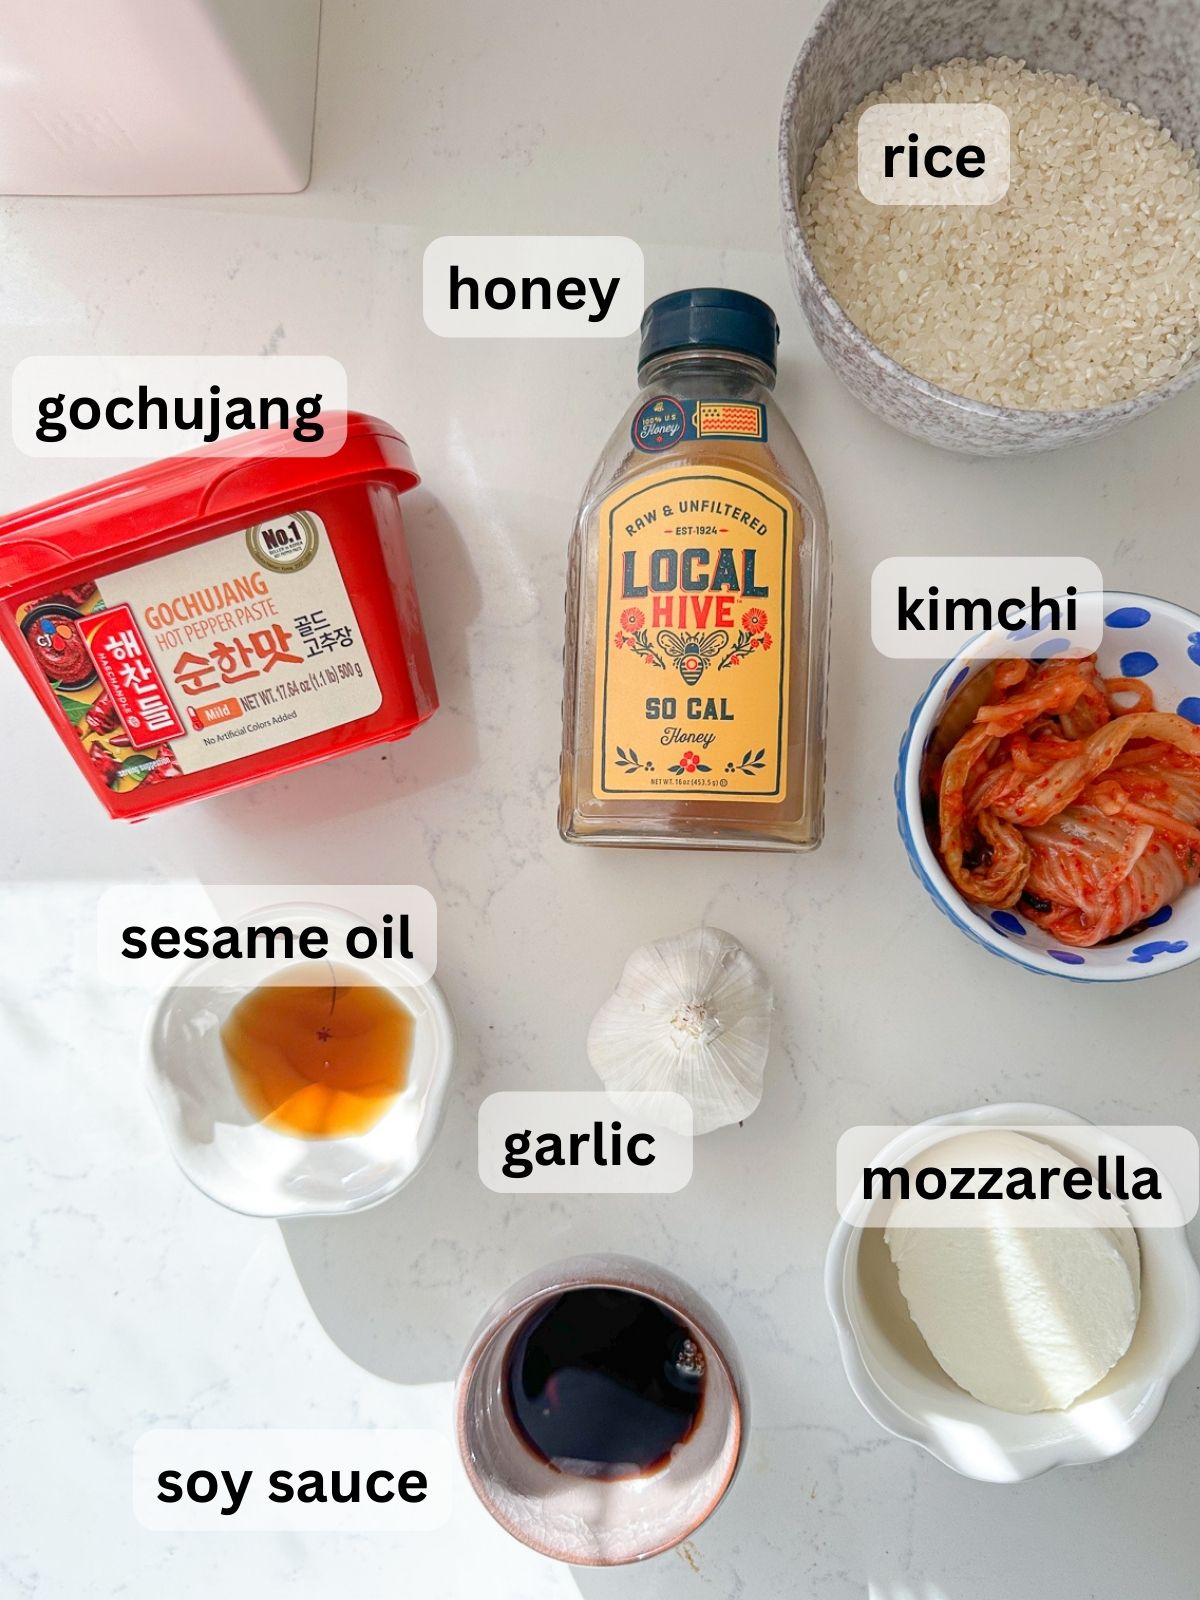 Gochujang, honey, rice, kimchi, mozzarella, garlic, soy sauce, sesame oil arranged in bowls.